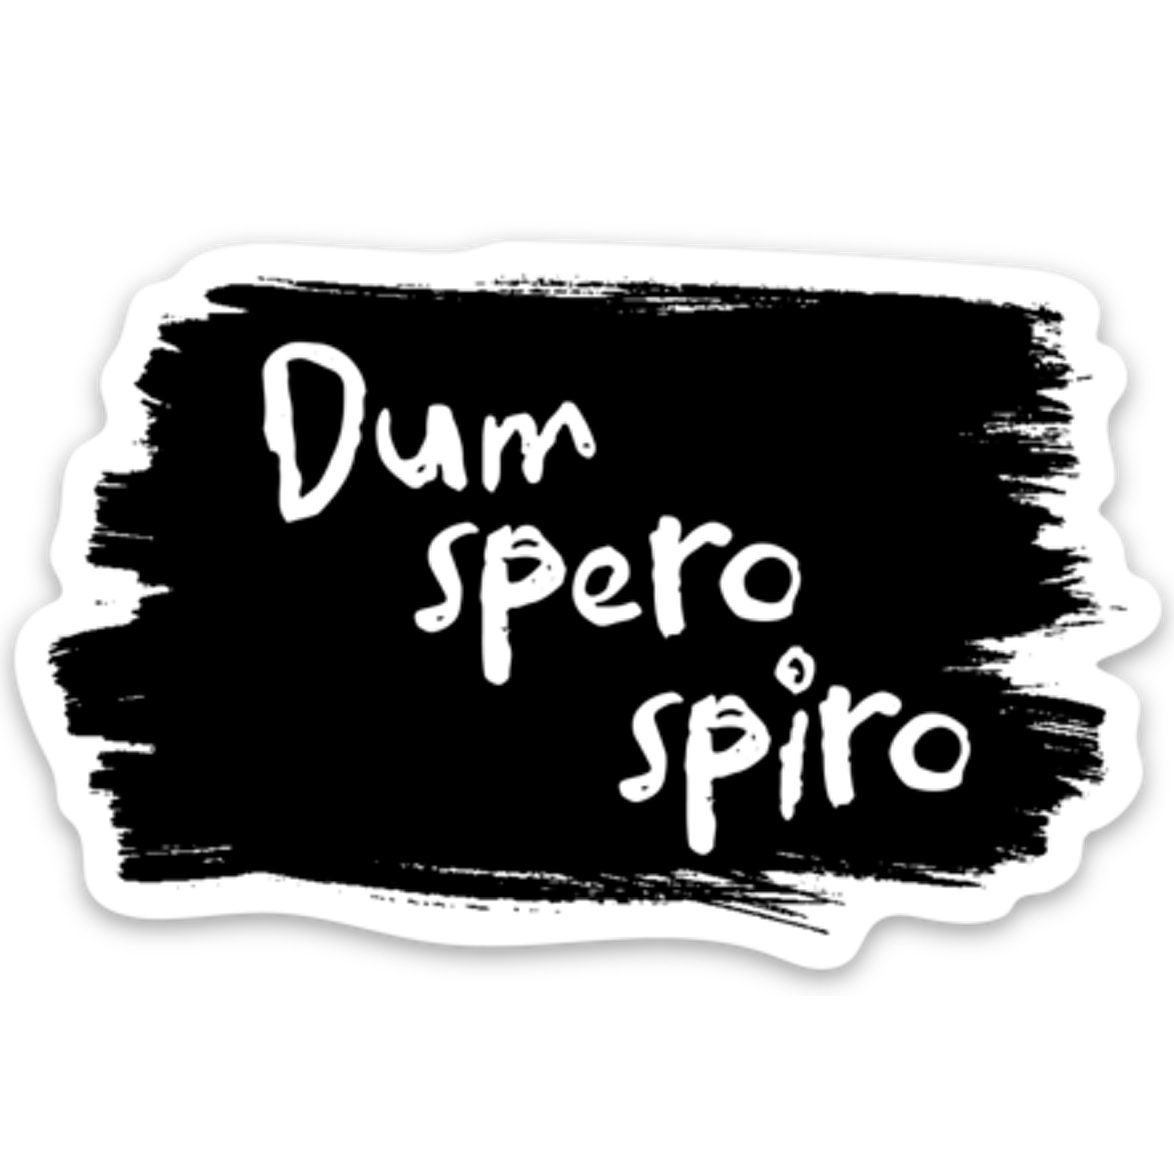 'Dum Spero Spiro' Magnet